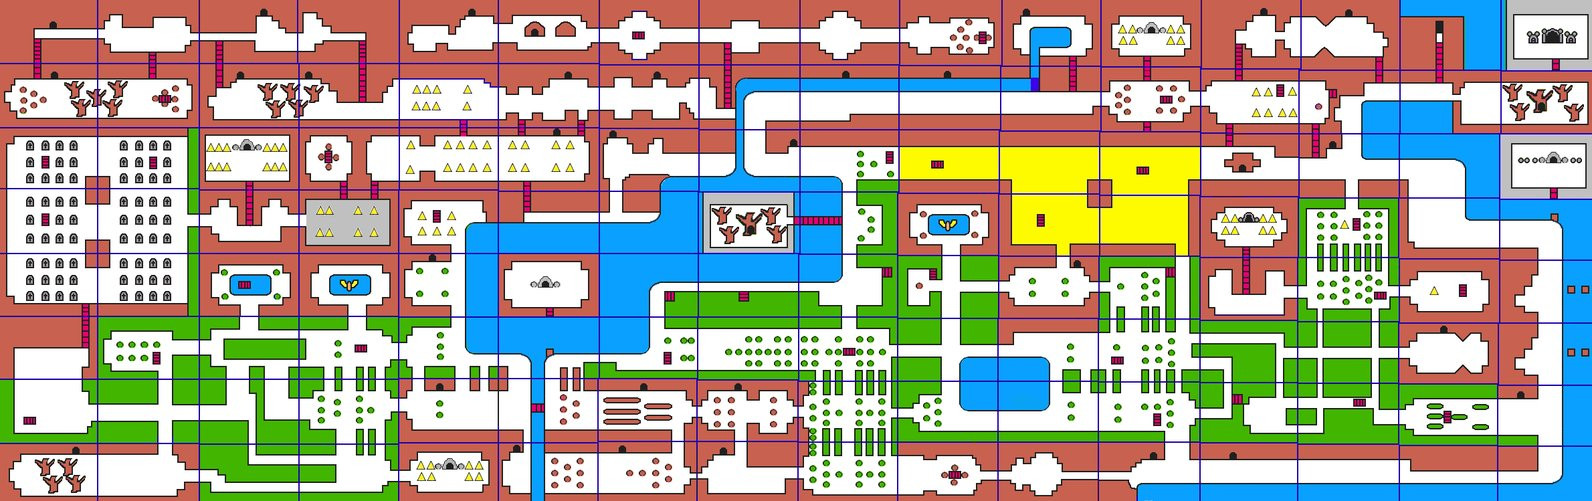 10 Best Of Printable Map Legend Of Zelda Printable Map. black kitchen with ...